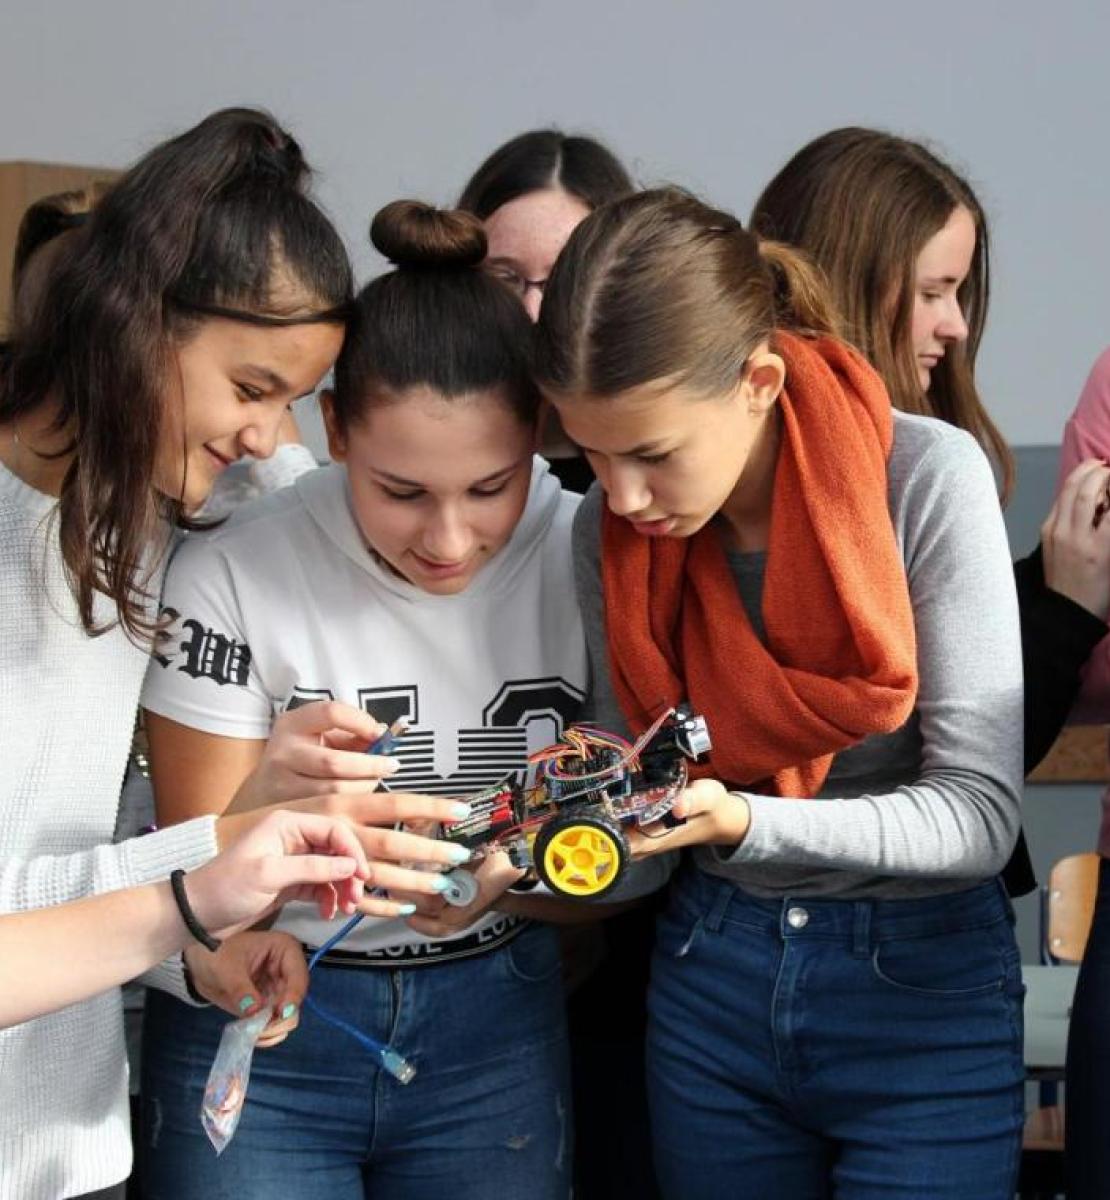 Un grupo de estudiantes trabajando en un modelo de coche robot.